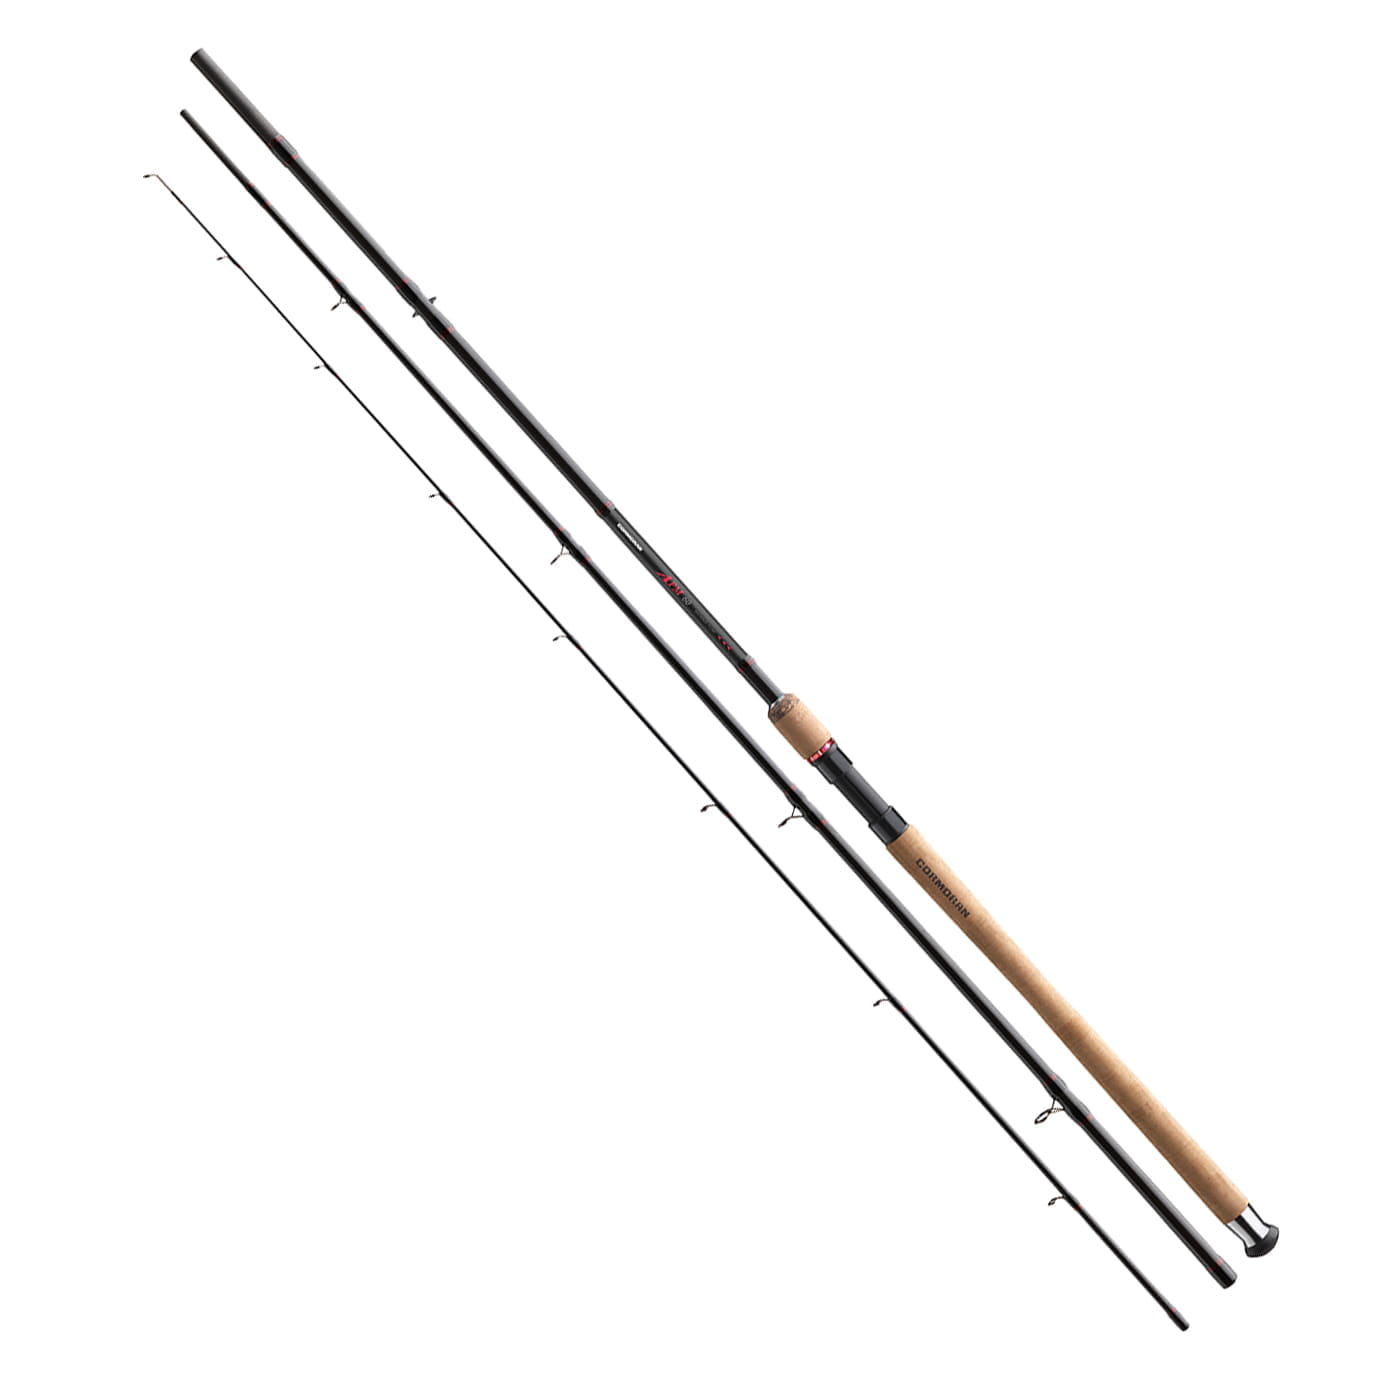 Buy 300cm spinning rods online